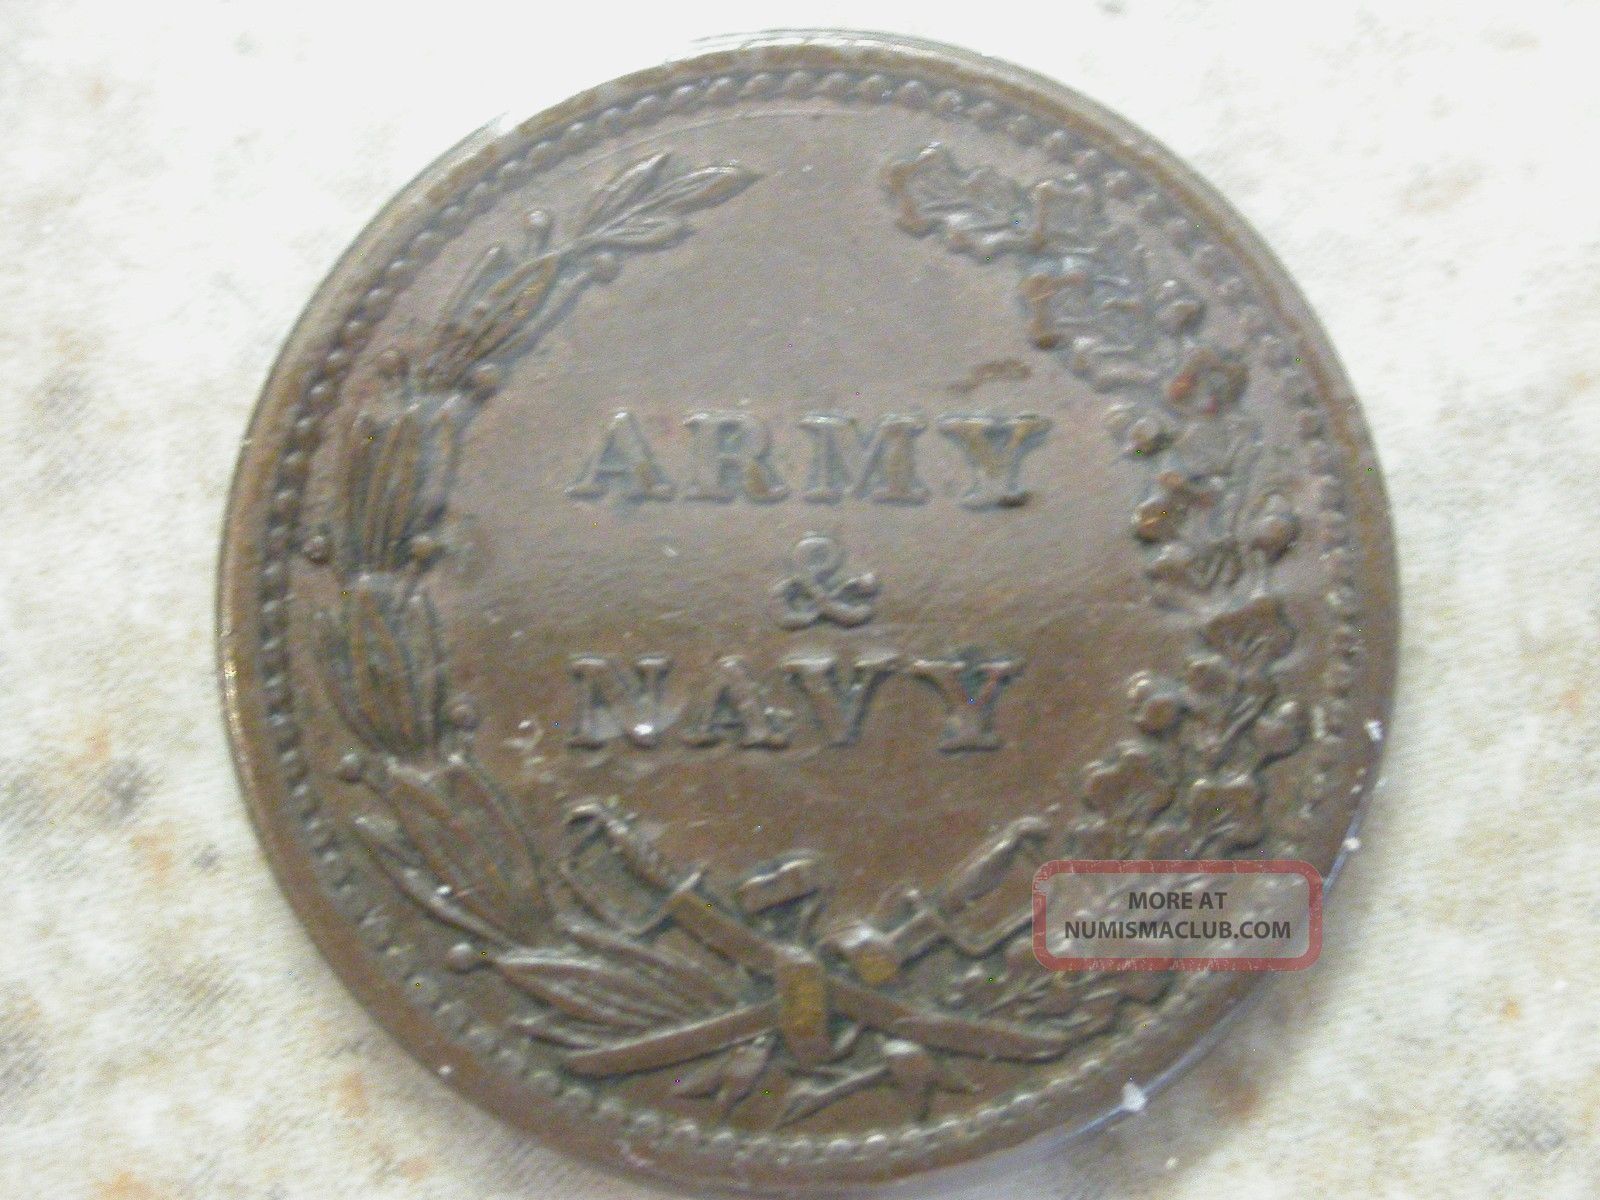 army & navy civil war token man holding sword